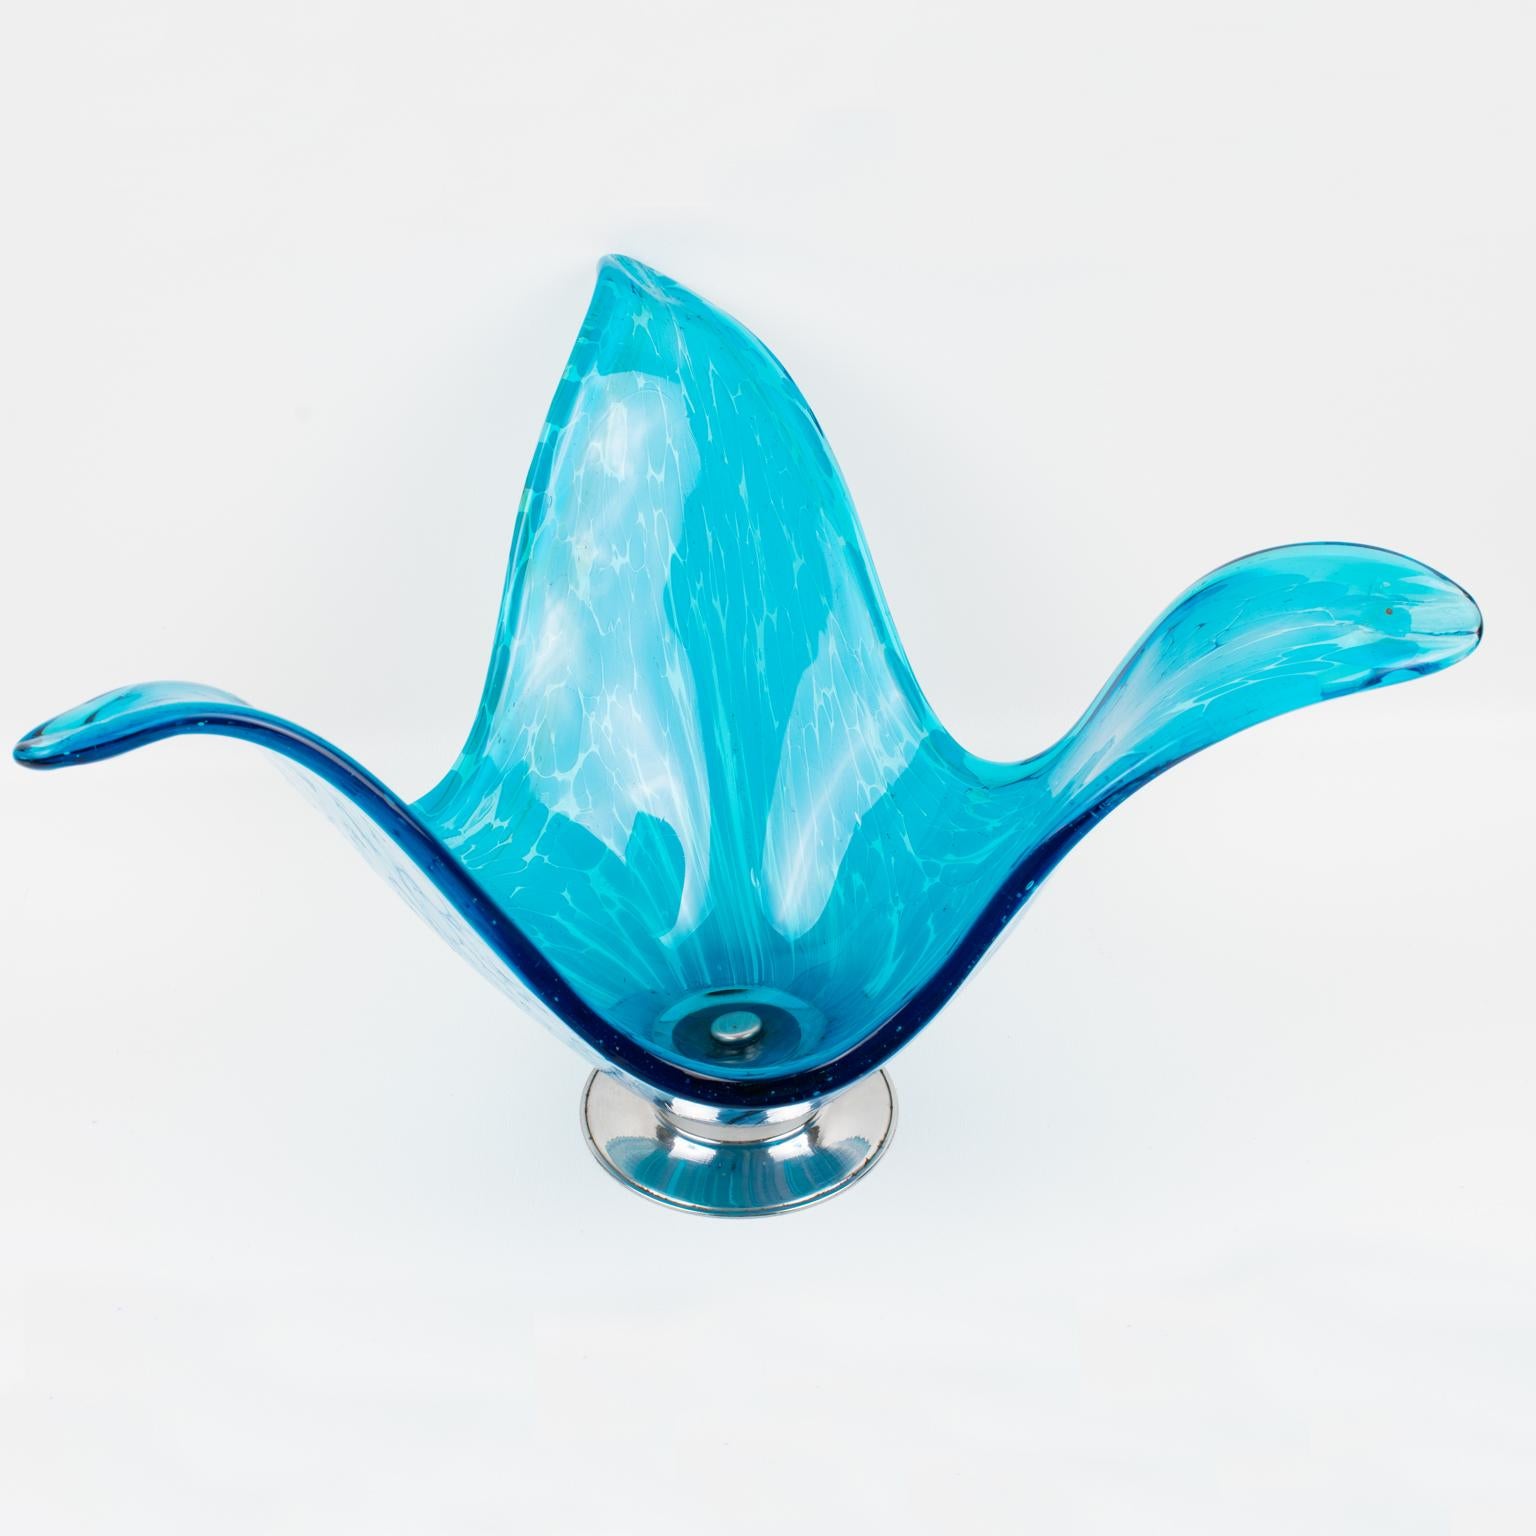 Italian Art Glass Murano Blue and White Sculptural Bowl Vase Centerpiece In Good Condition For Sale In Atlanta, GA